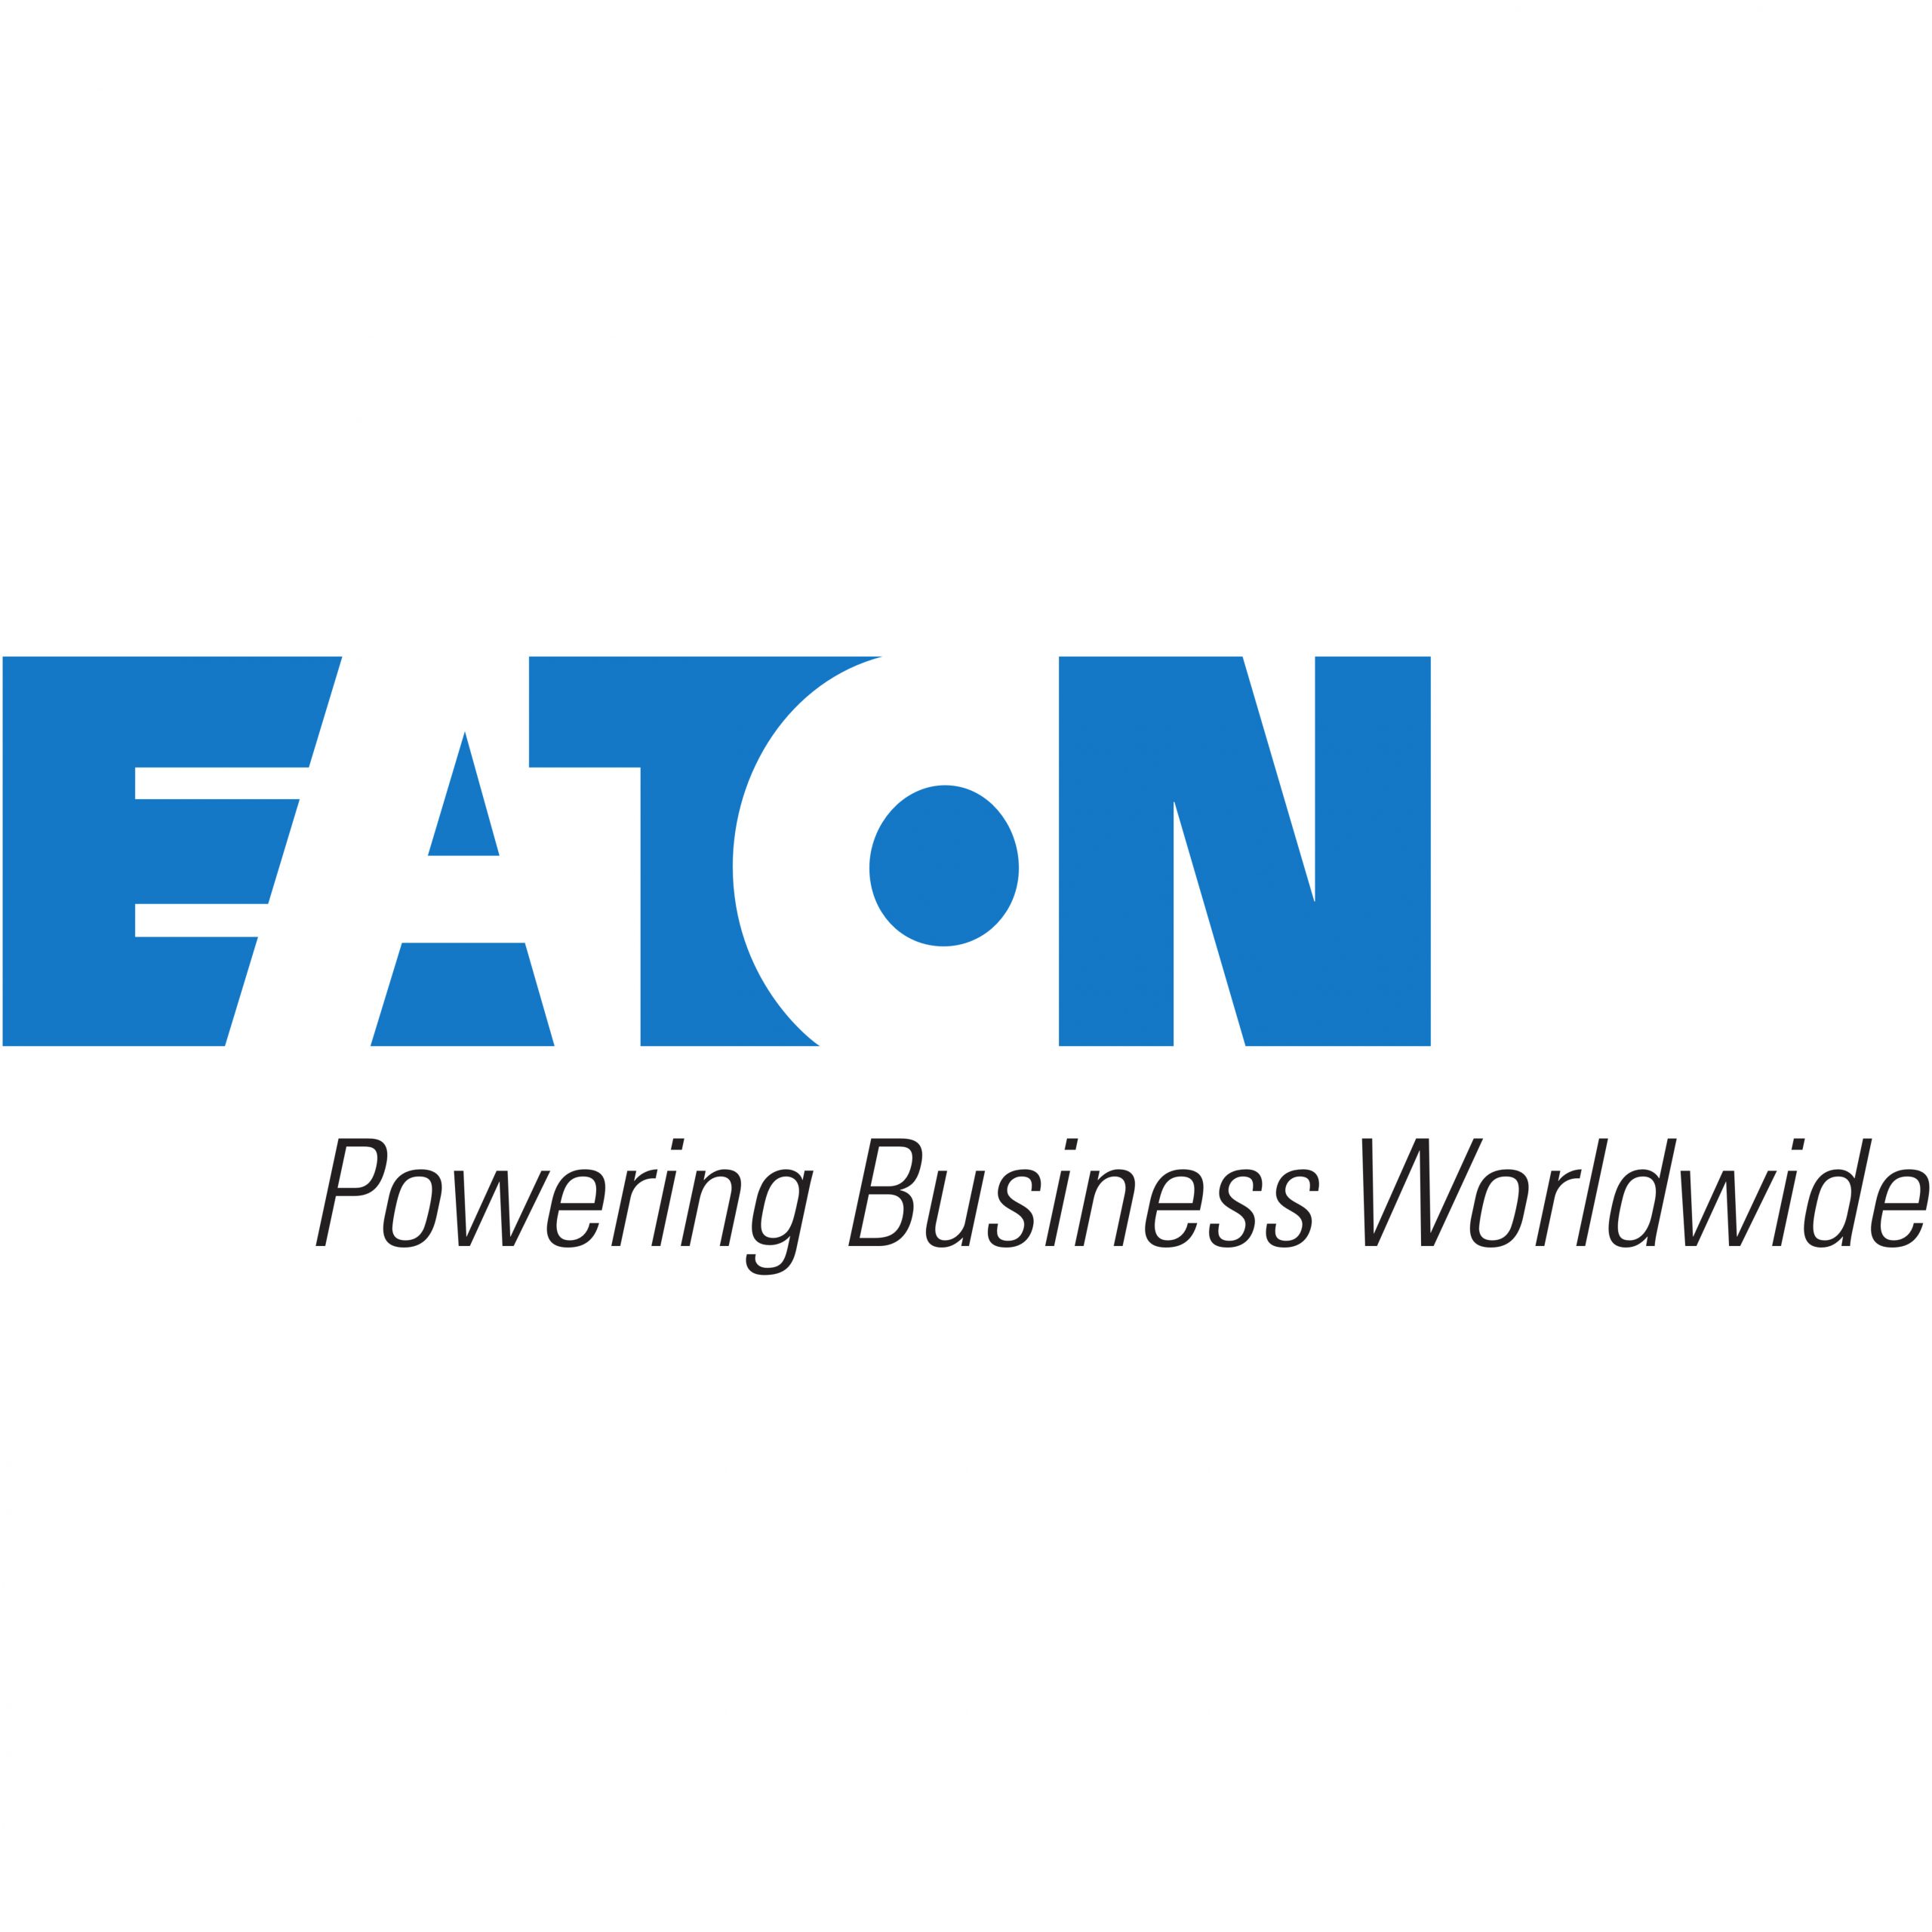 Eaton Flex OnsiteExtended ServiceService24 x 7 x Next DayOn-siteMaintenanceParts & Labor W2FLN7NEDX-0050